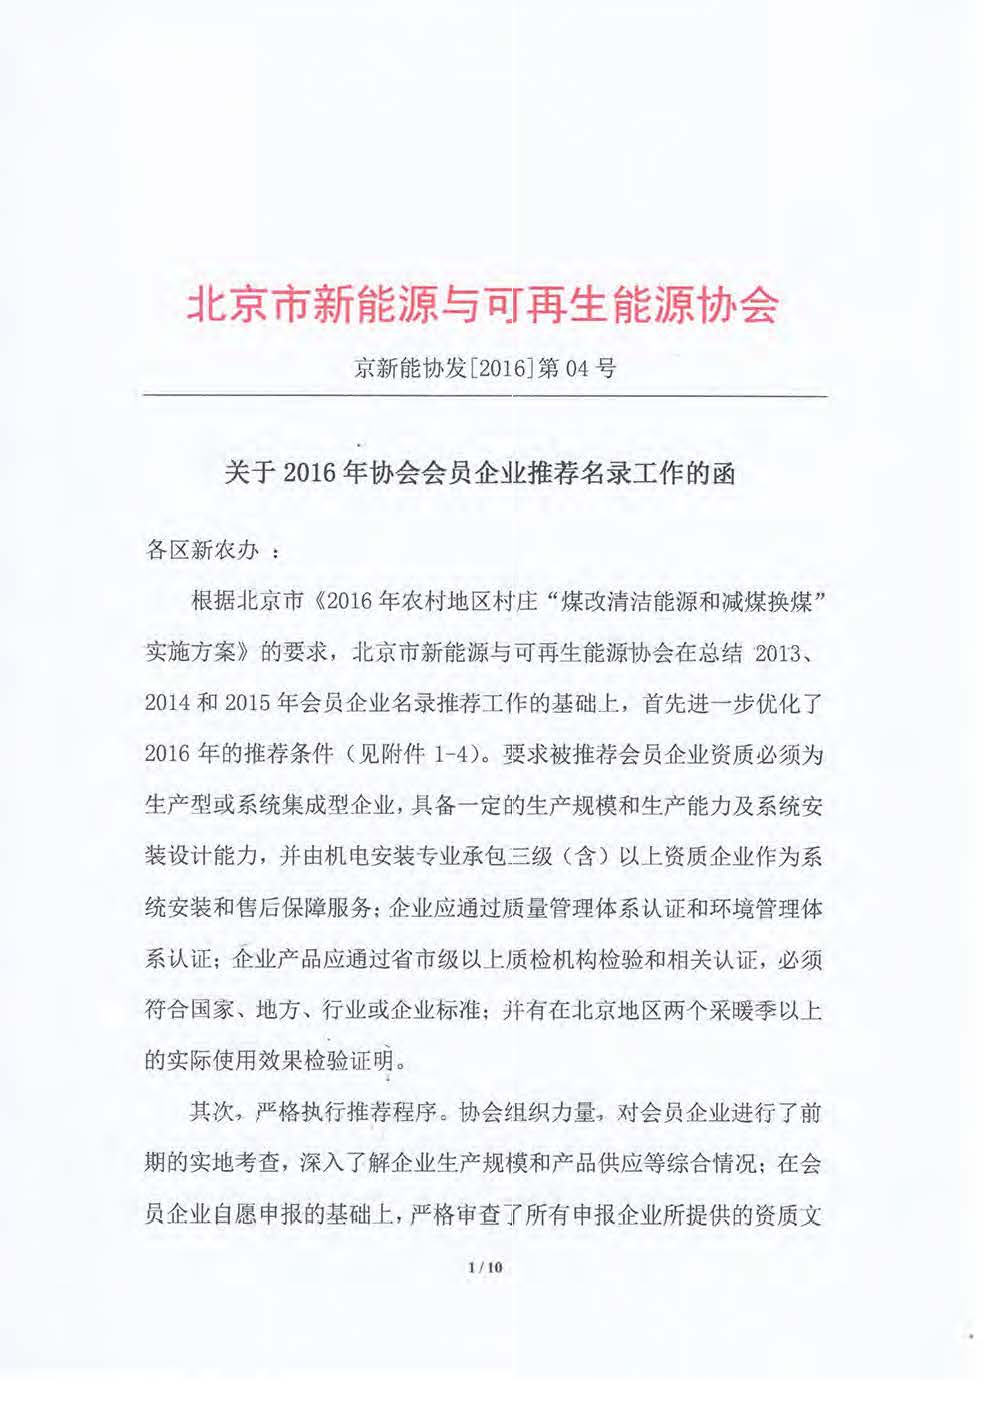 Beijing "coal to electricity" enterprise directory